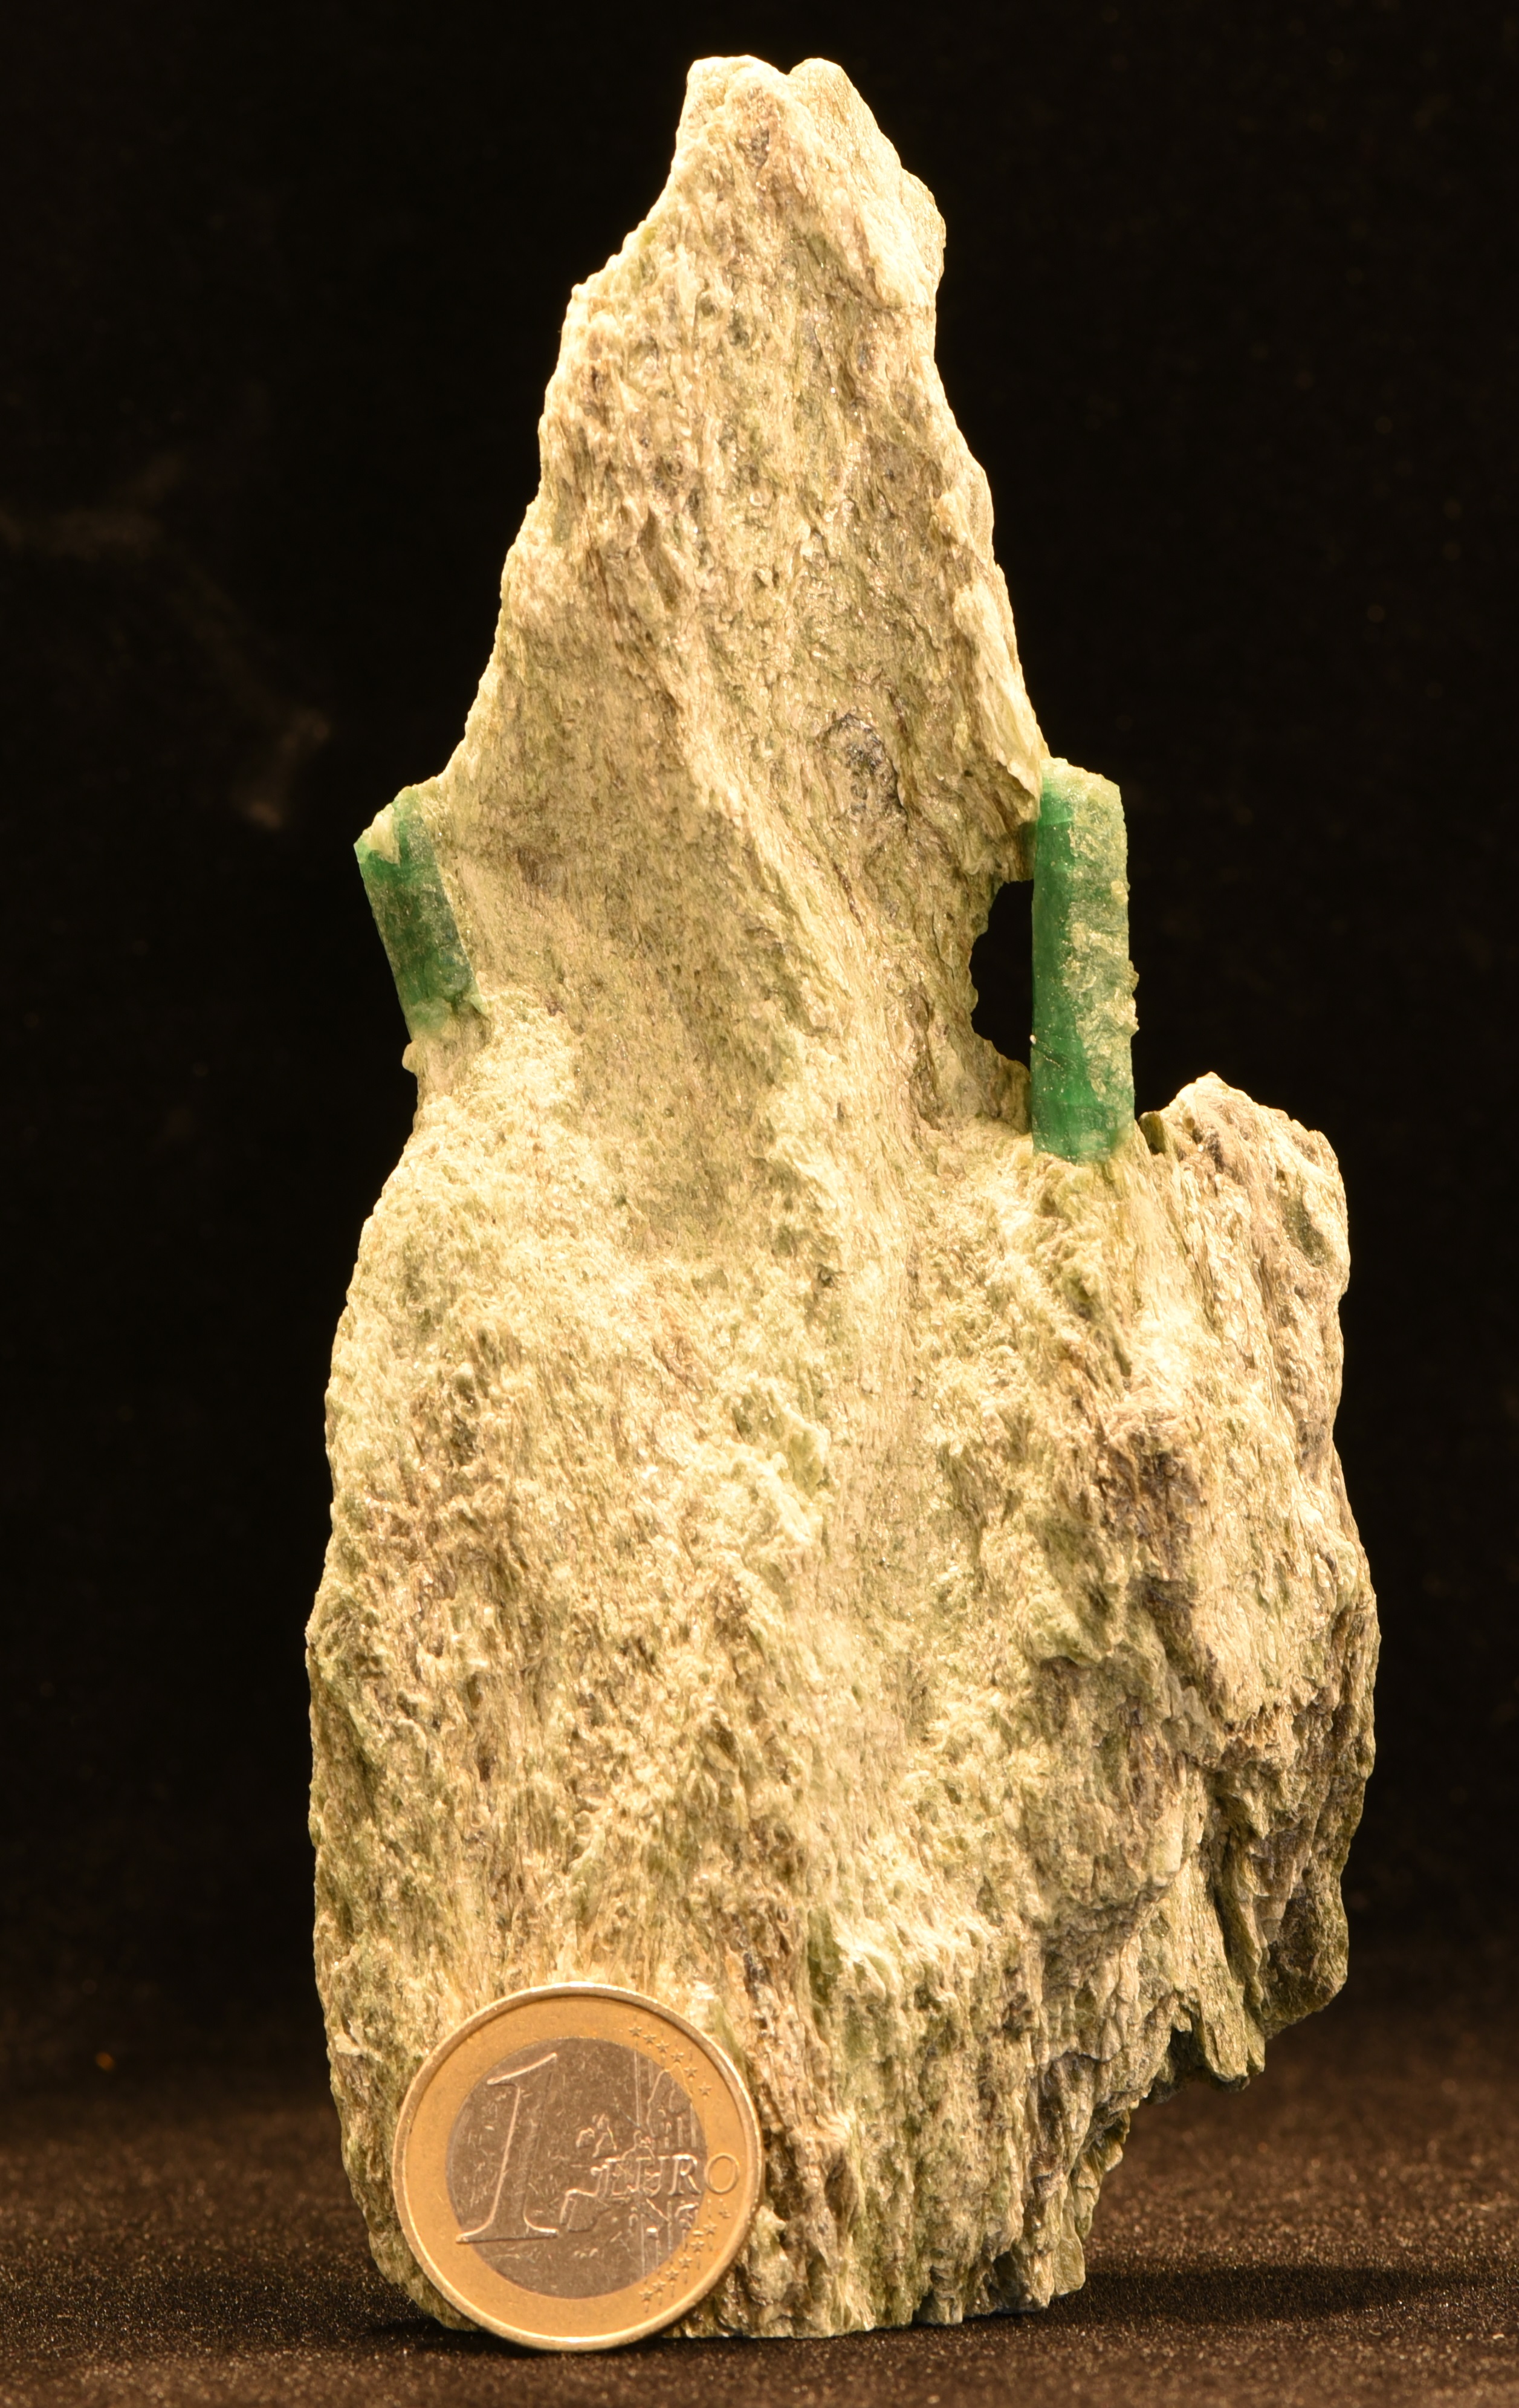     Smaragdstufe mit freistehendem Kristall